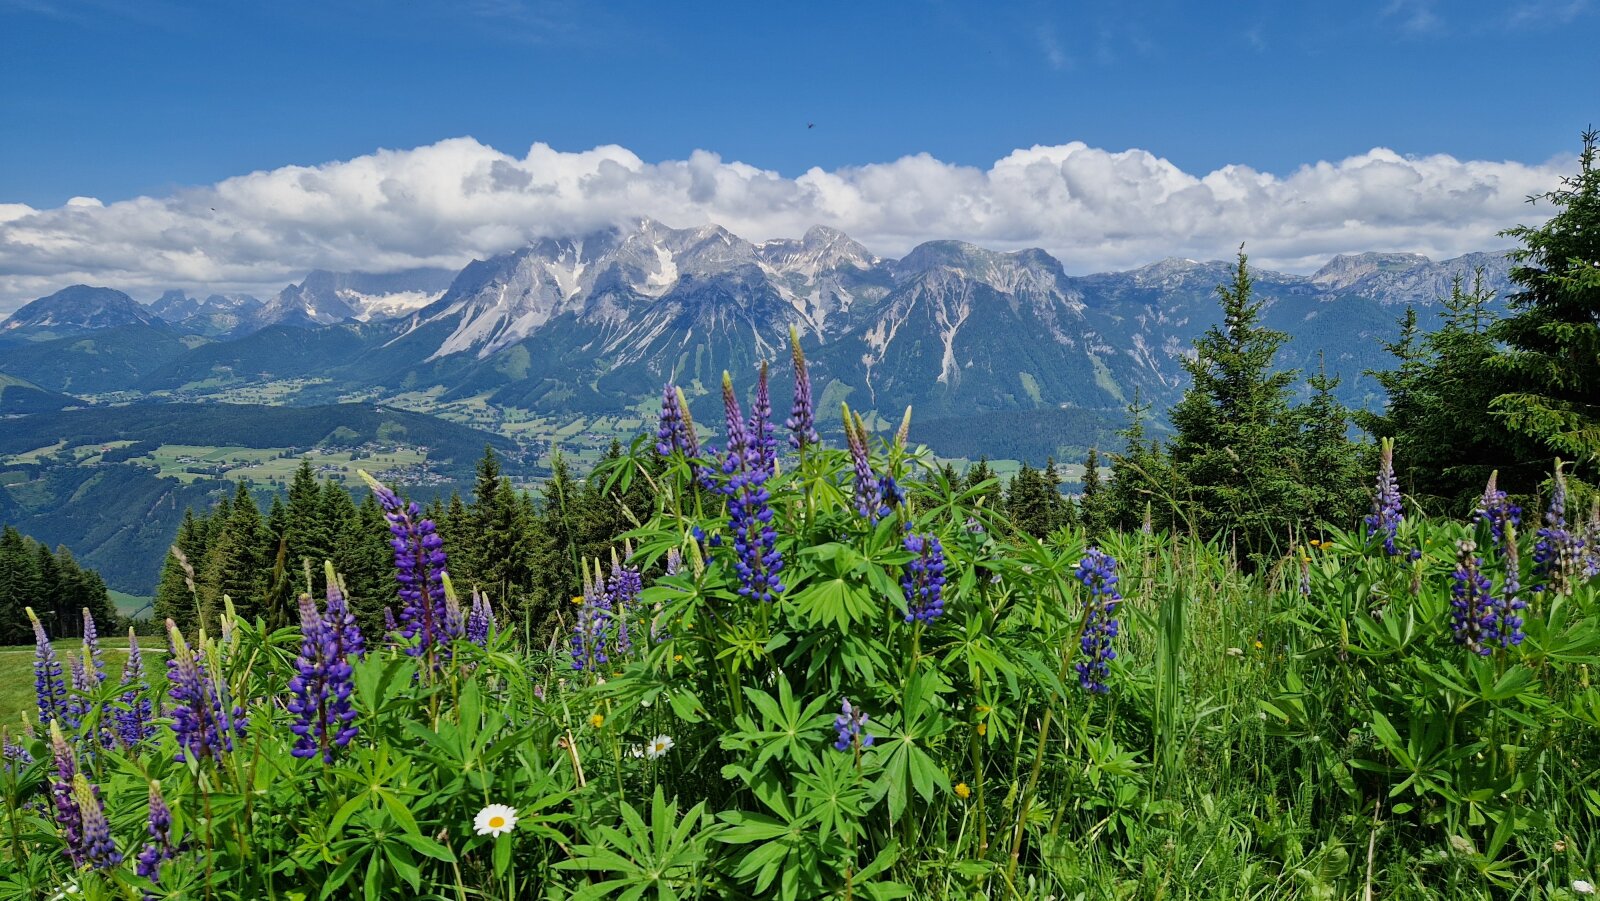 Alpesi virágoskert, háttérben a Dachstein vonulata